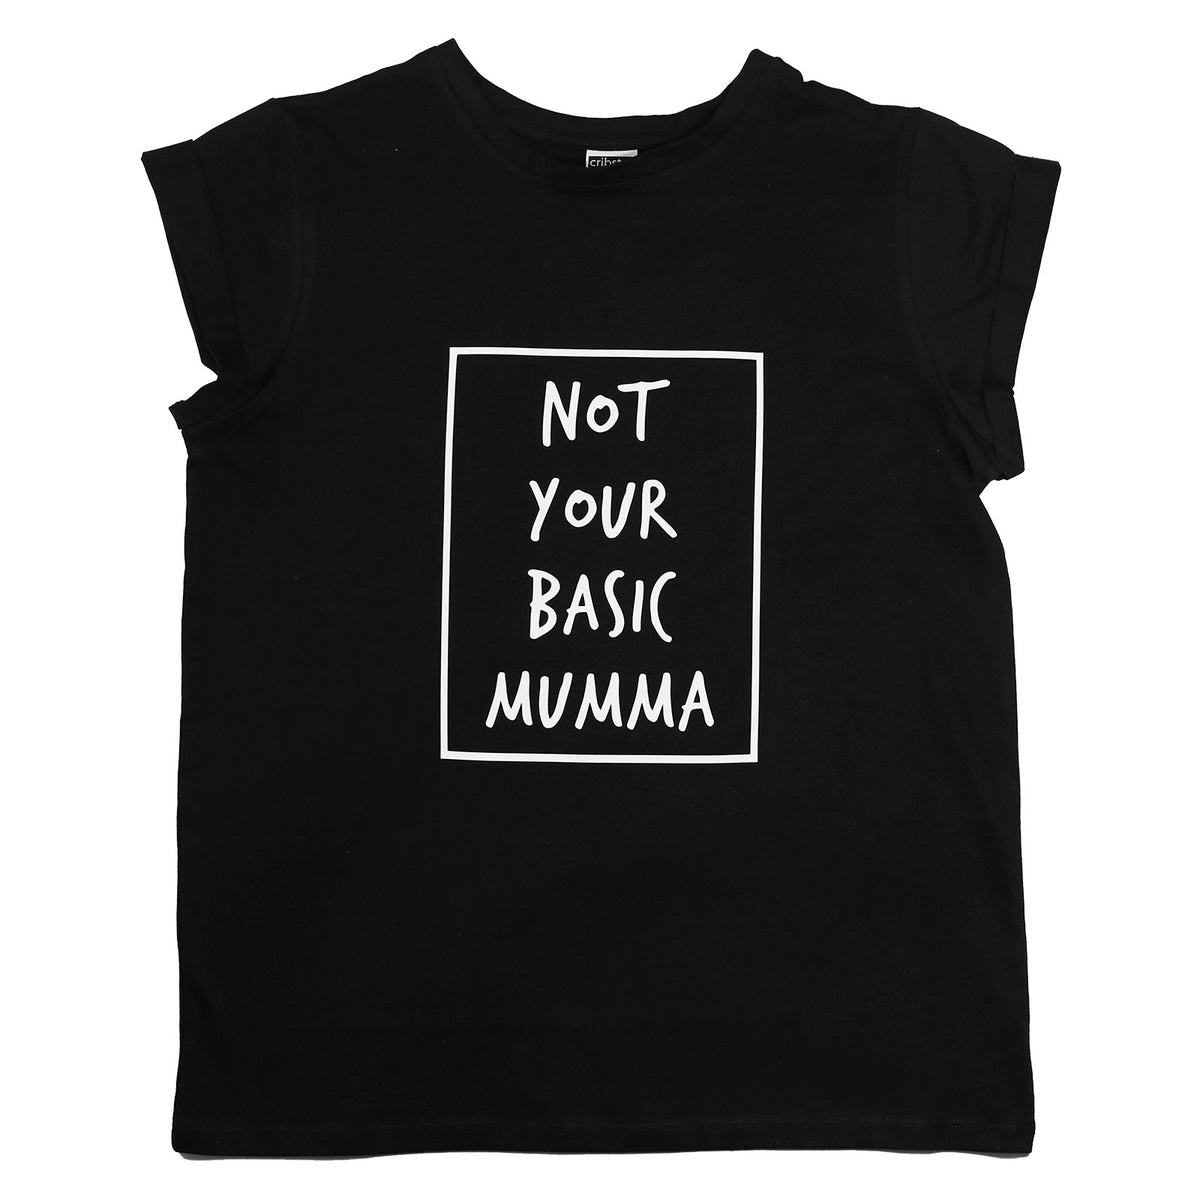 Not Your Basic Mumma T-Shirt - Black